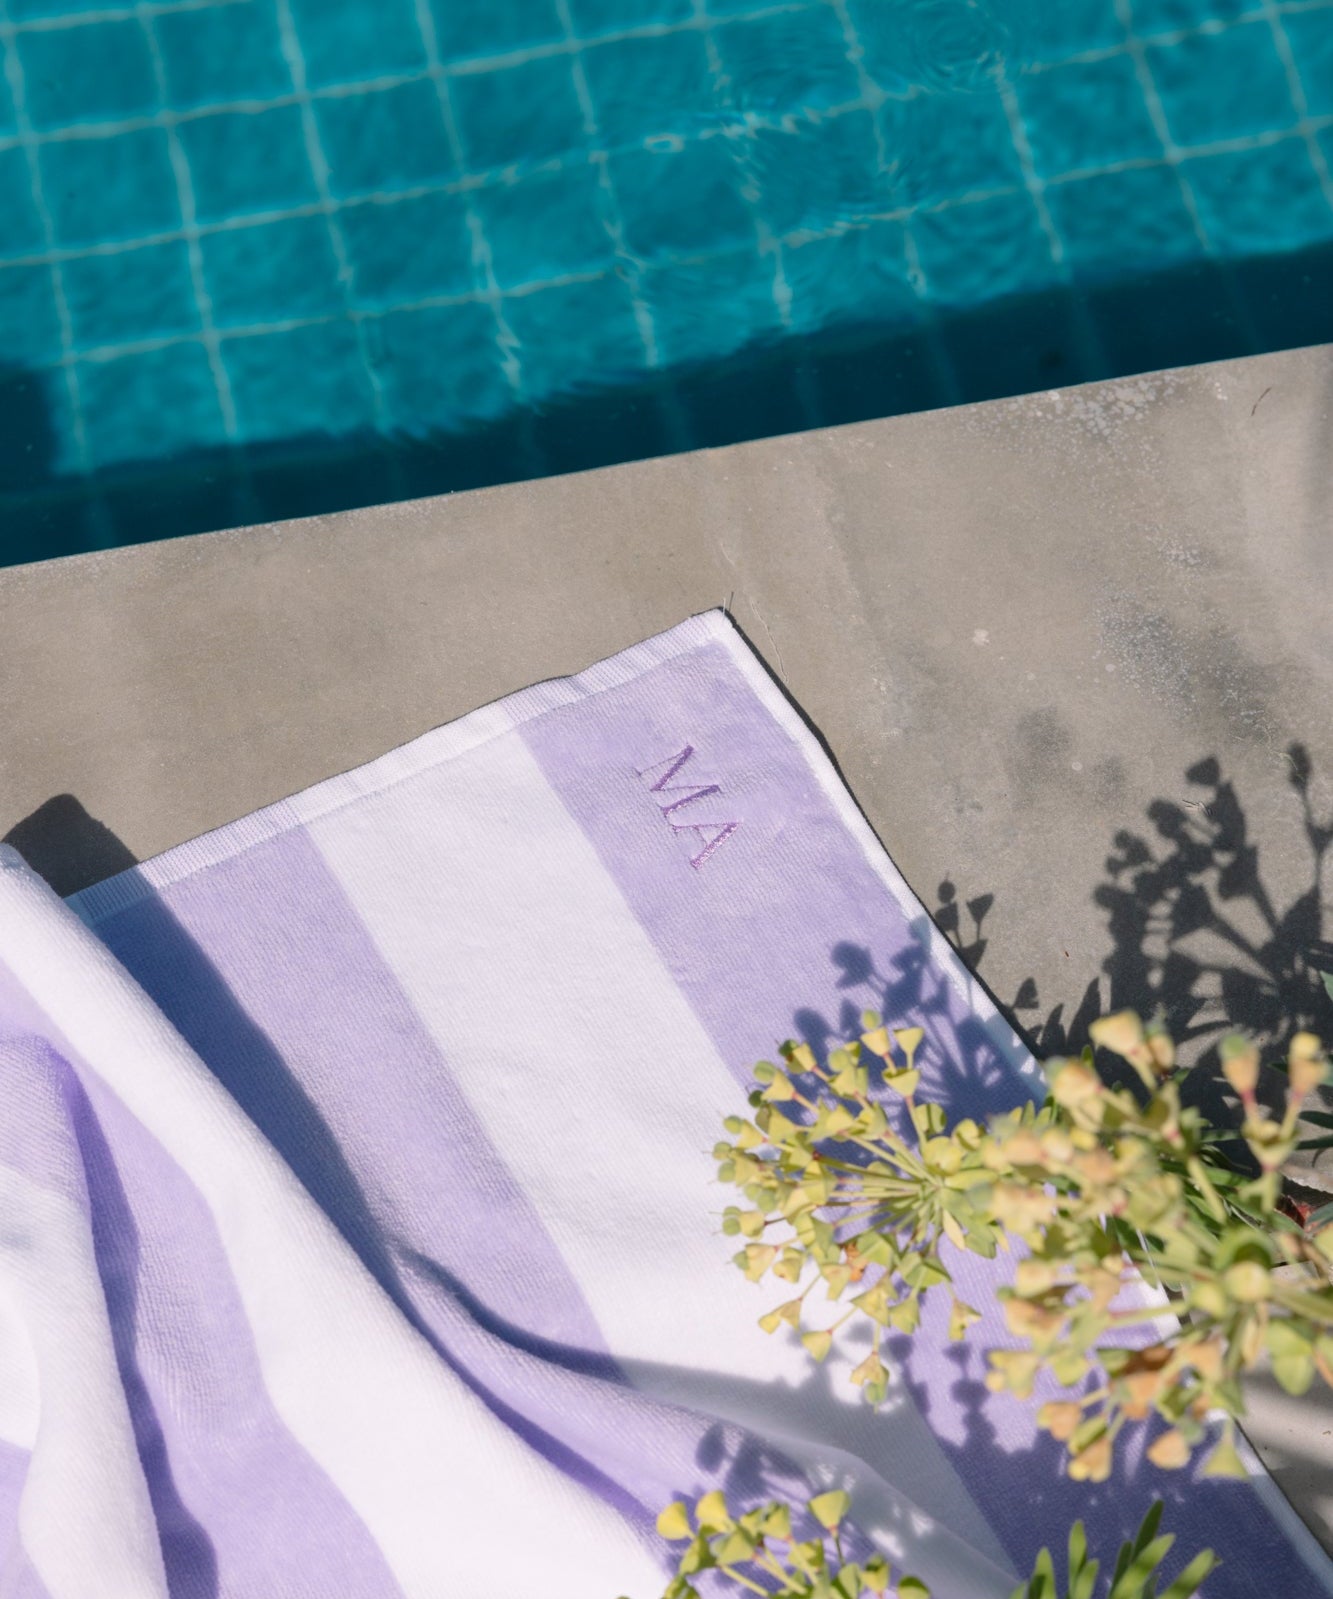 torres-novas-gibalta-beach-towels-vertical-stripes-product-embroidery-lavender-1_338468b2-9934-4ec6-916e-e5d65979d6ec.jpg